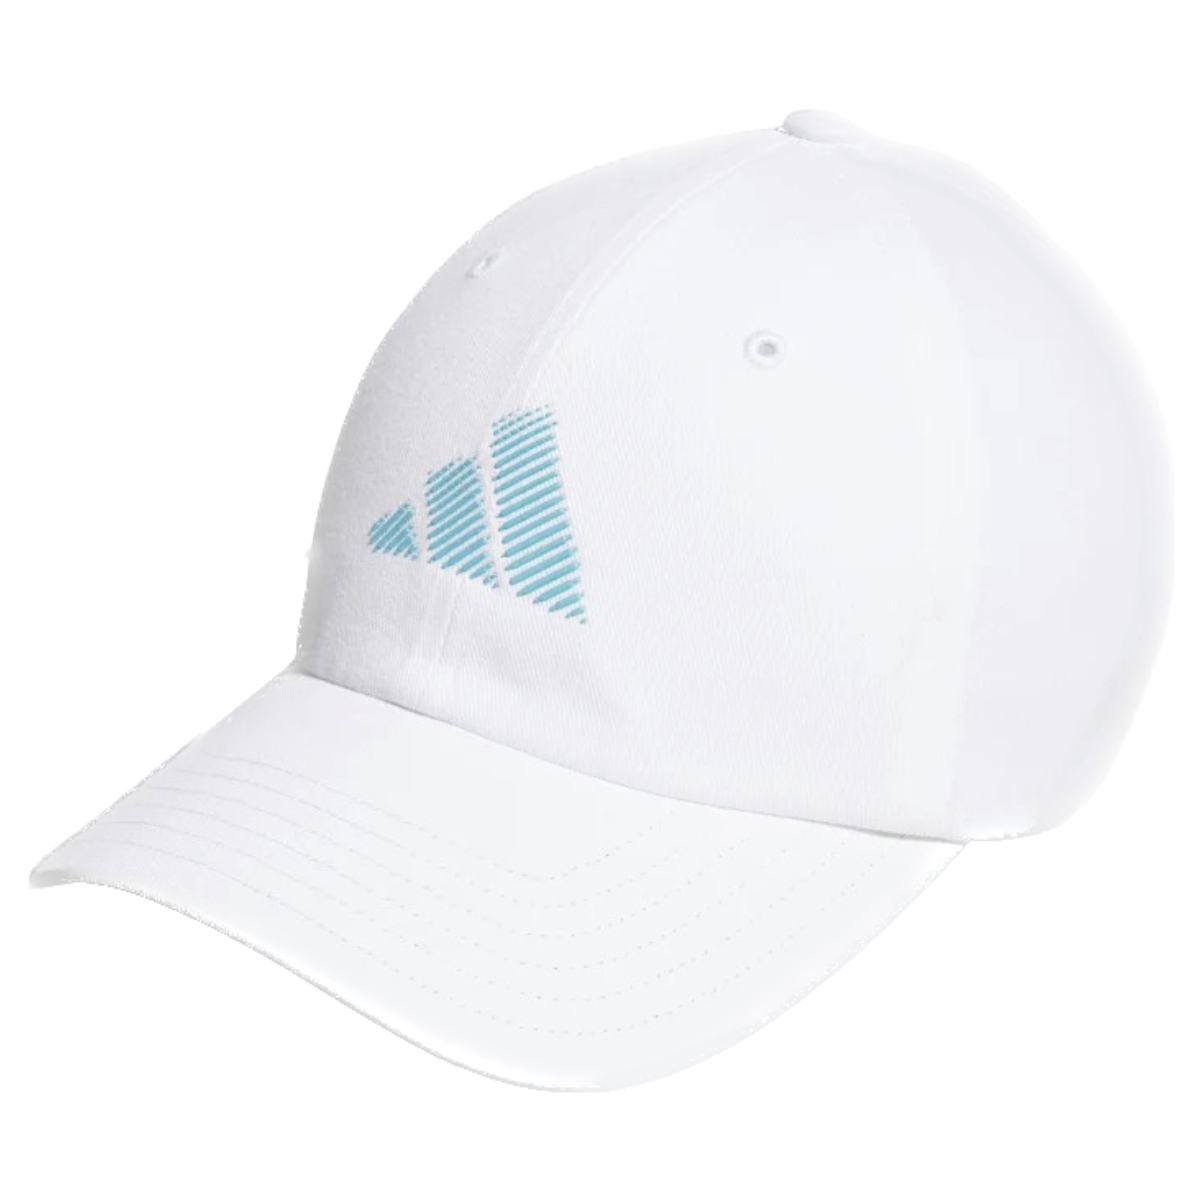 Adidas Criscross Hat White